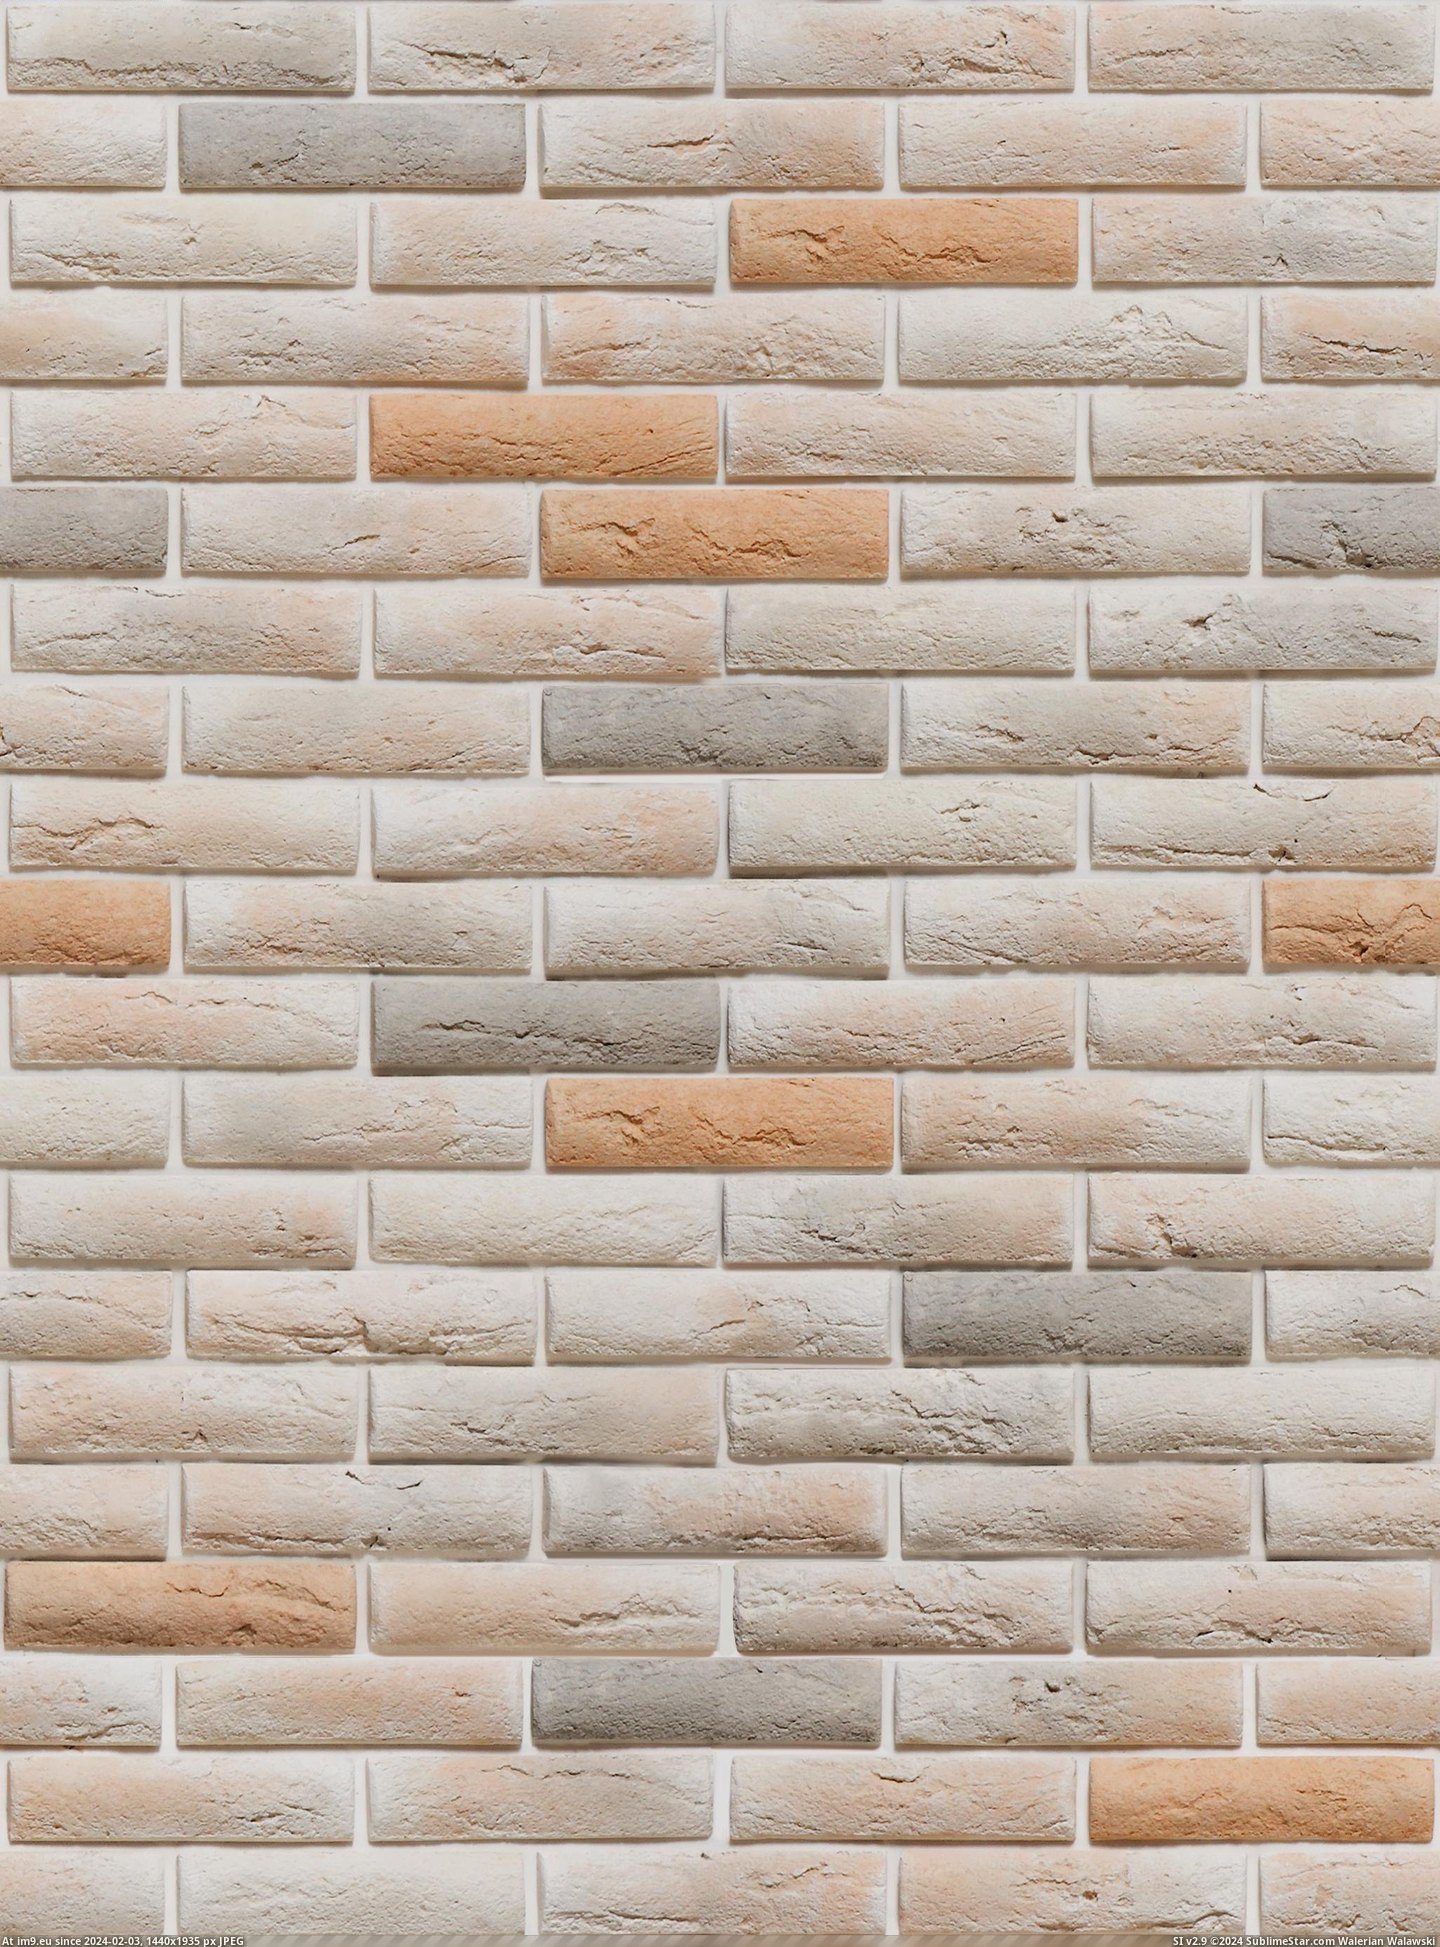 #Brick #Chester #Texture Chester (brick texture 1) Pic. (Obraz z album Brick walls textures and wallpapers))